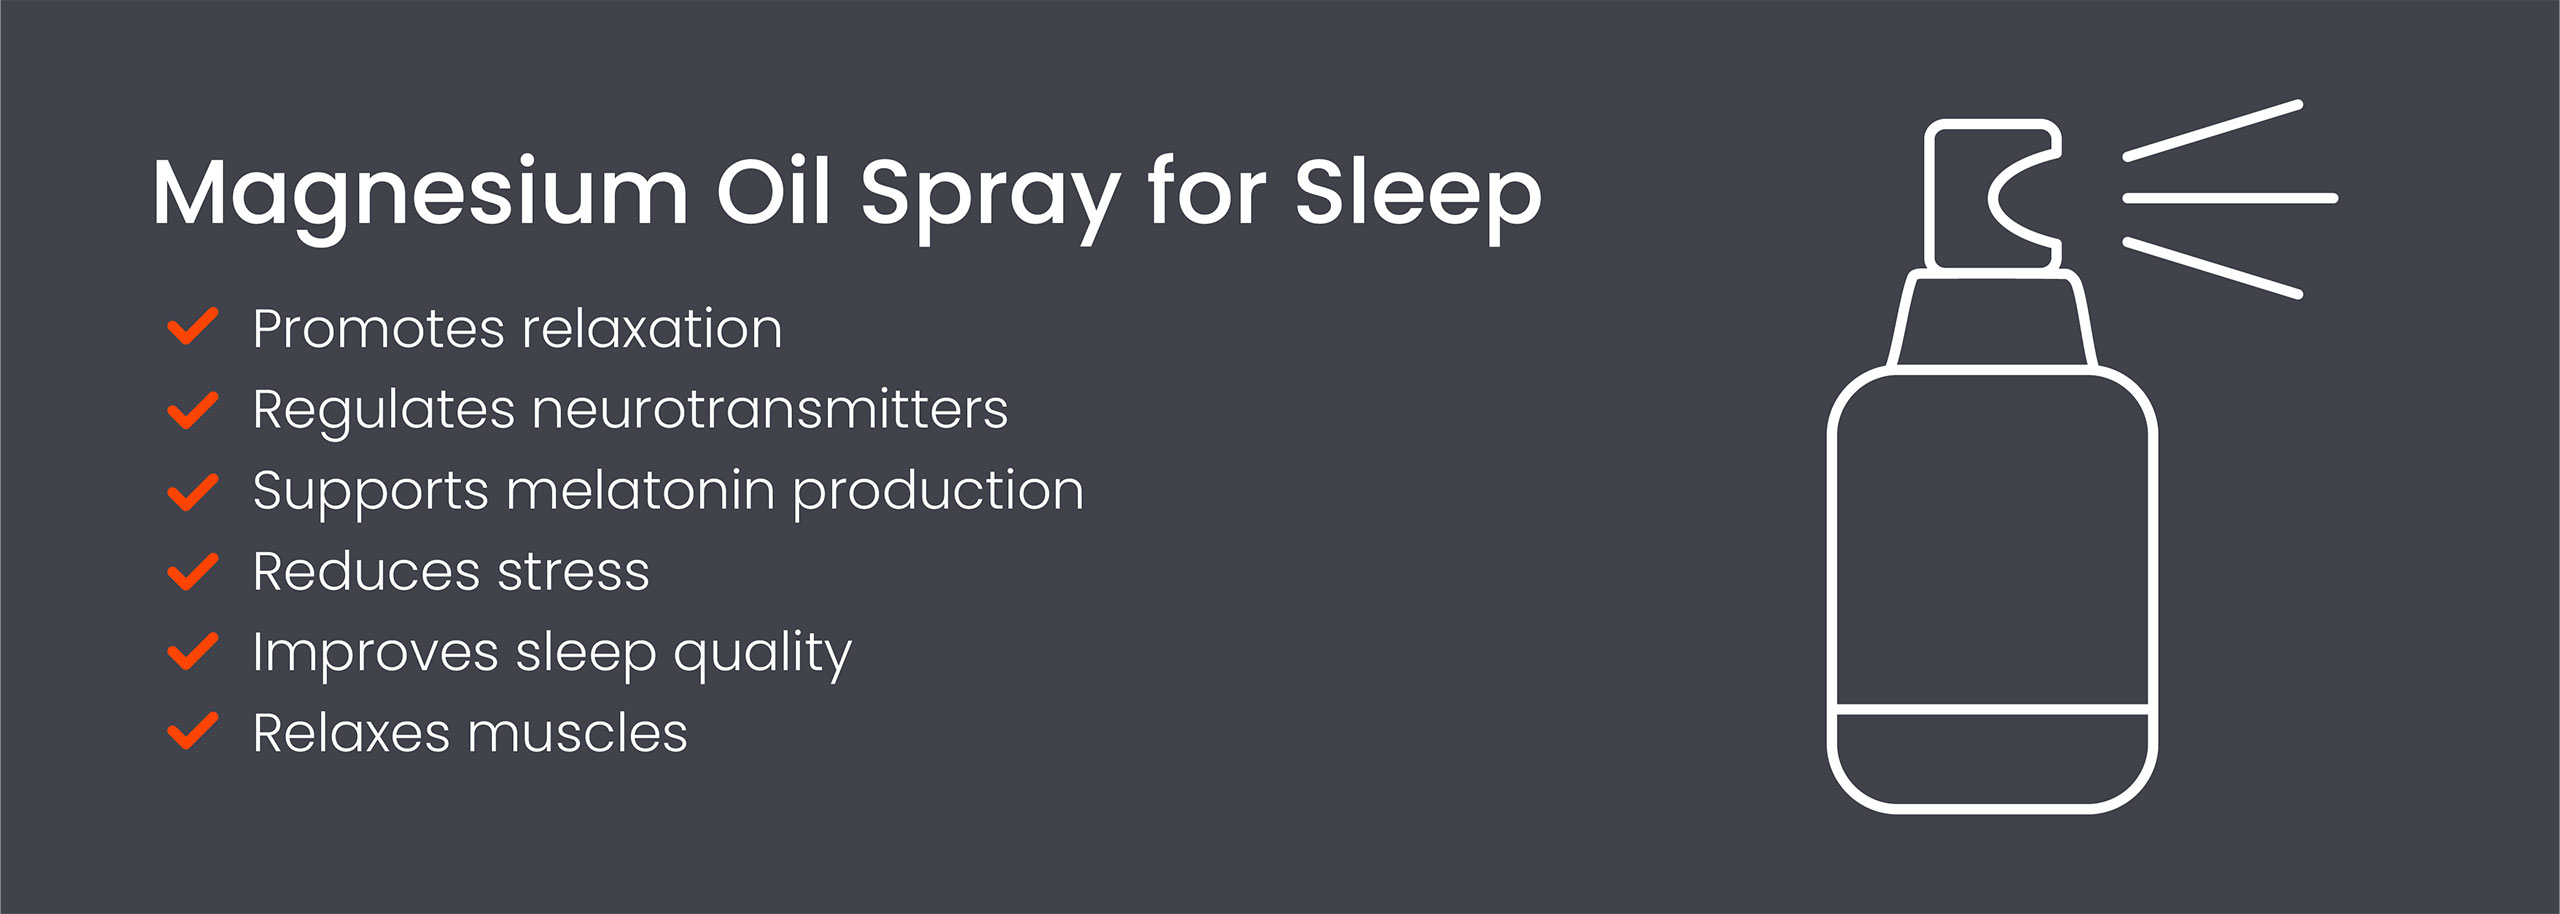 Benefits of magnesium oil spray for sleep